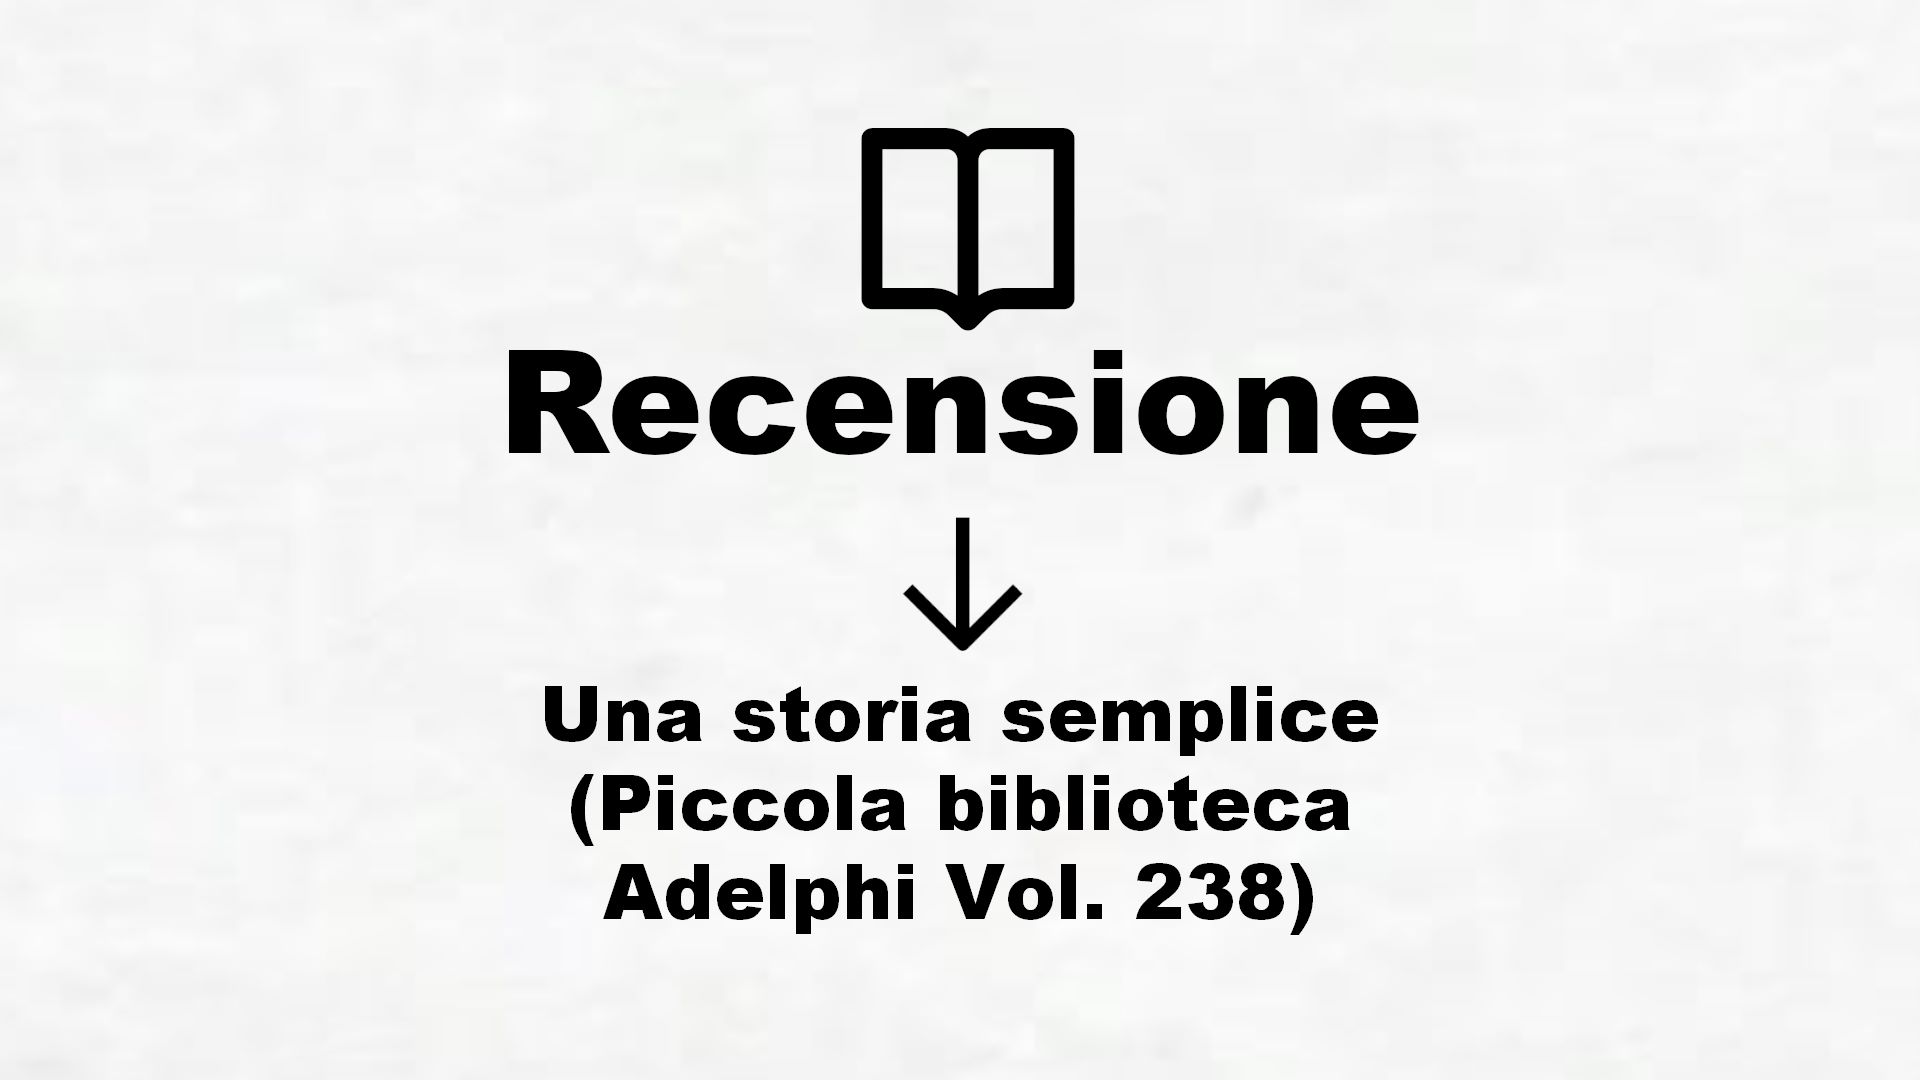 Una storia semplice (Piccola biblioteca Adelphi Vol. 238) – Recensione Libro